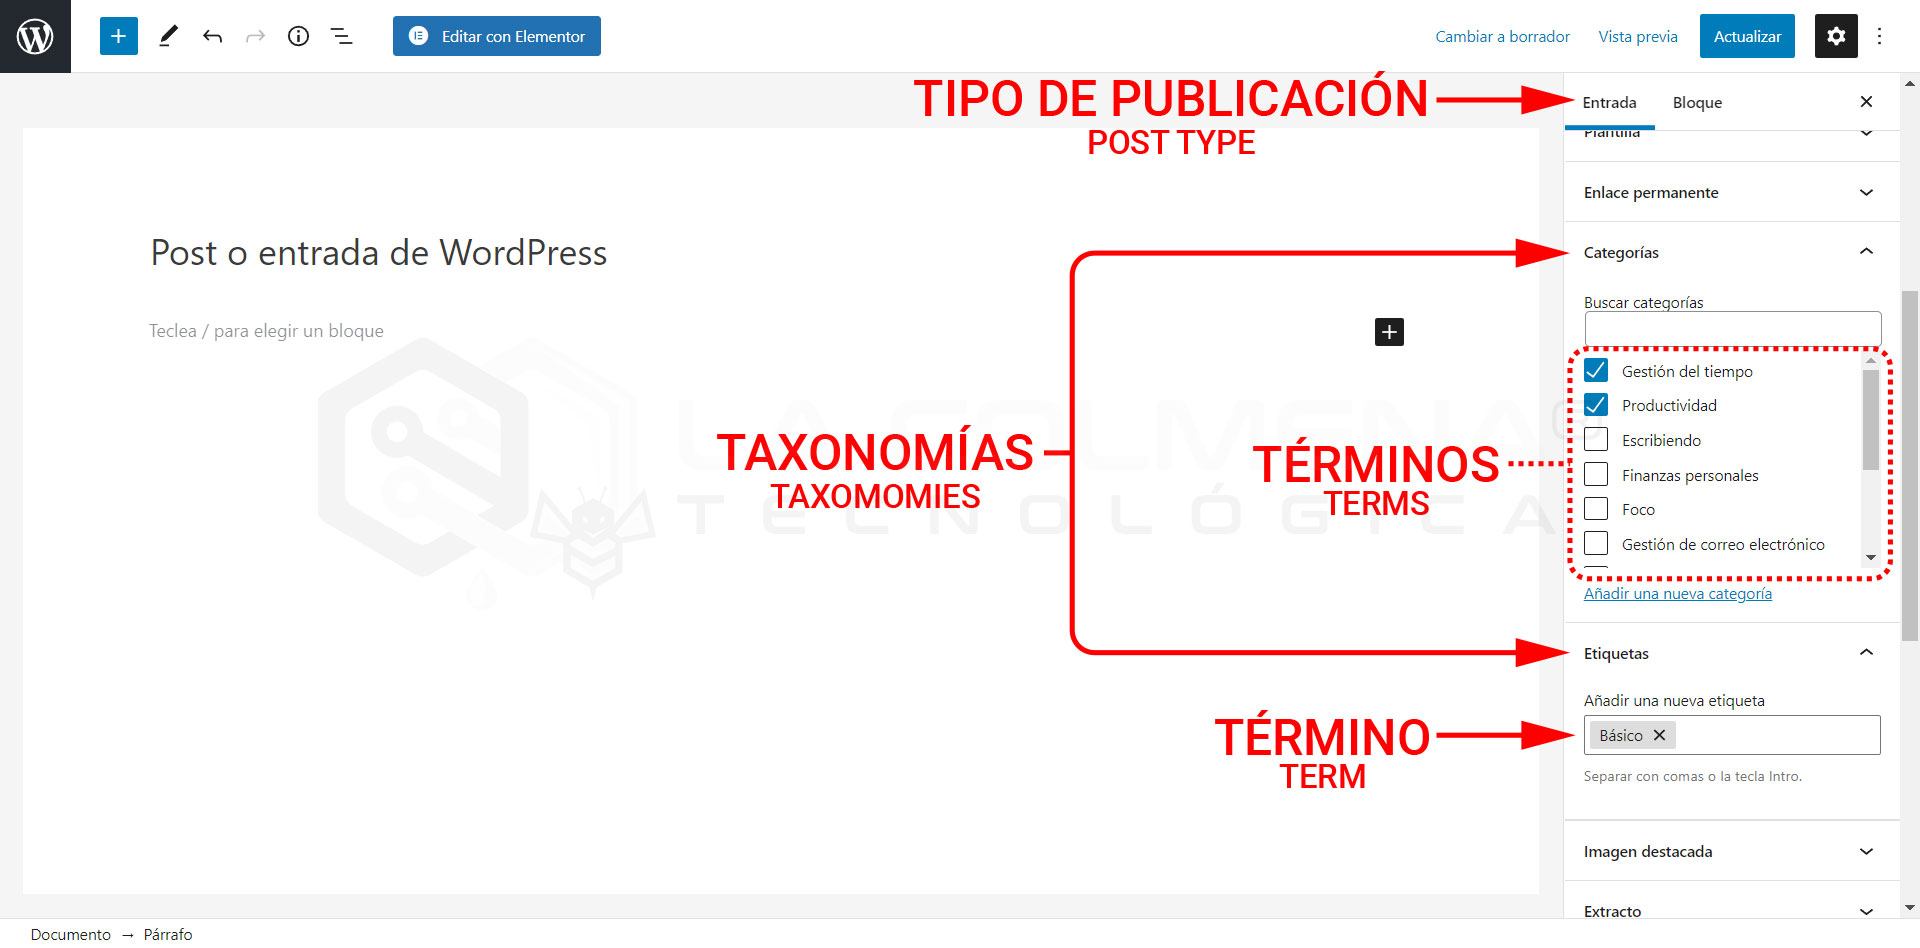 Taxonomías y términos (taxonomies and terms)